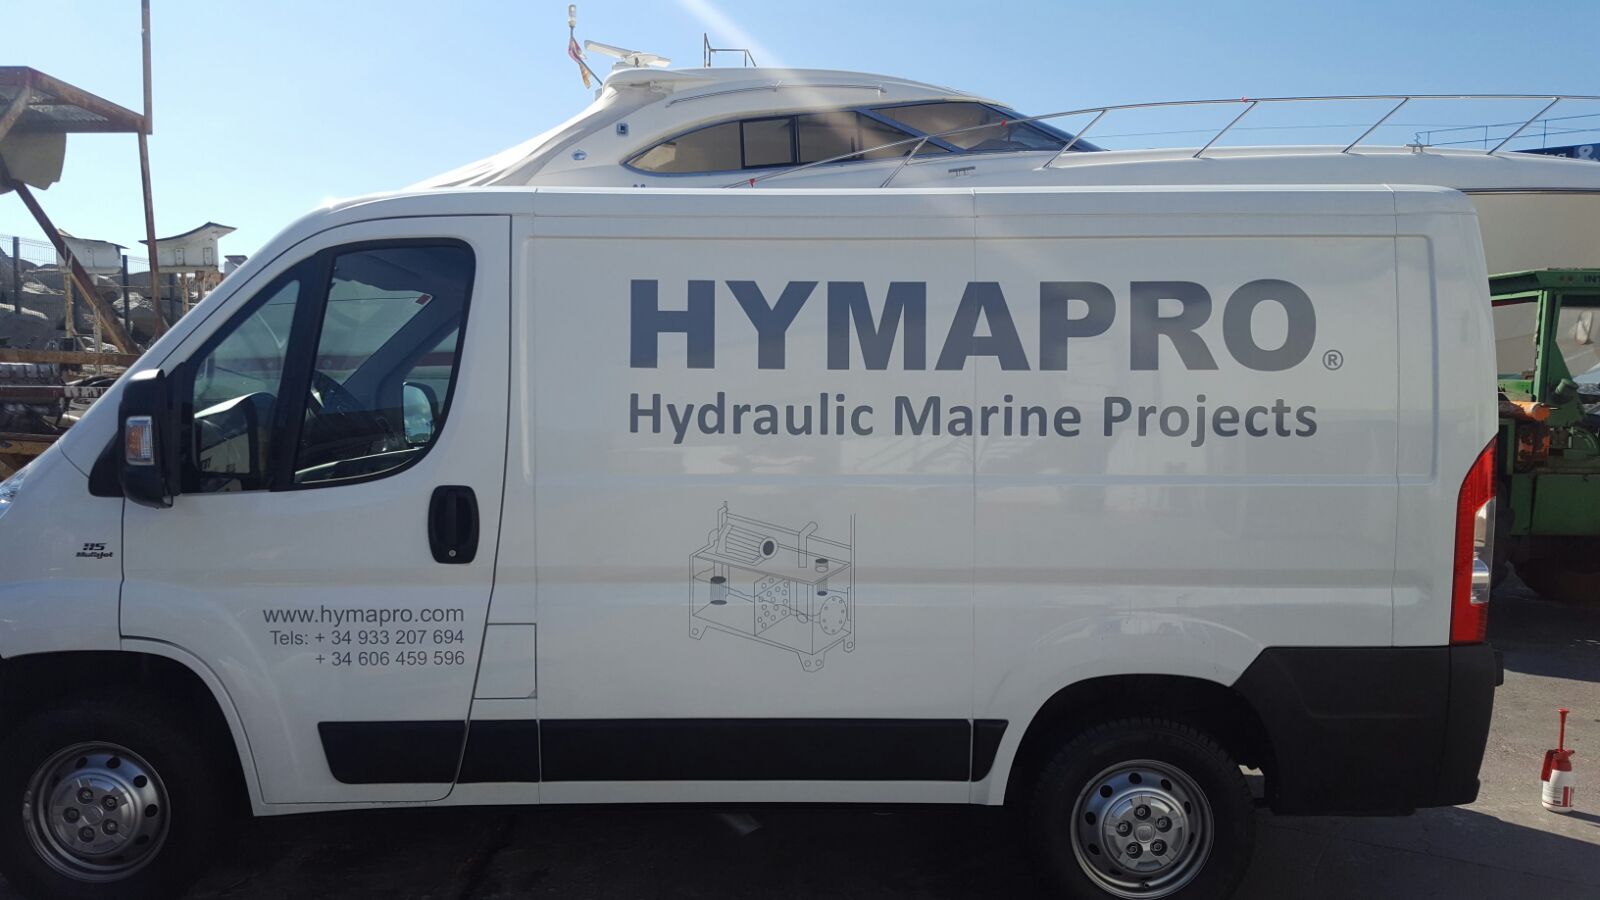 Hymapro Van Crew for Hydraulic Cylinder Works Barcelona Yachting